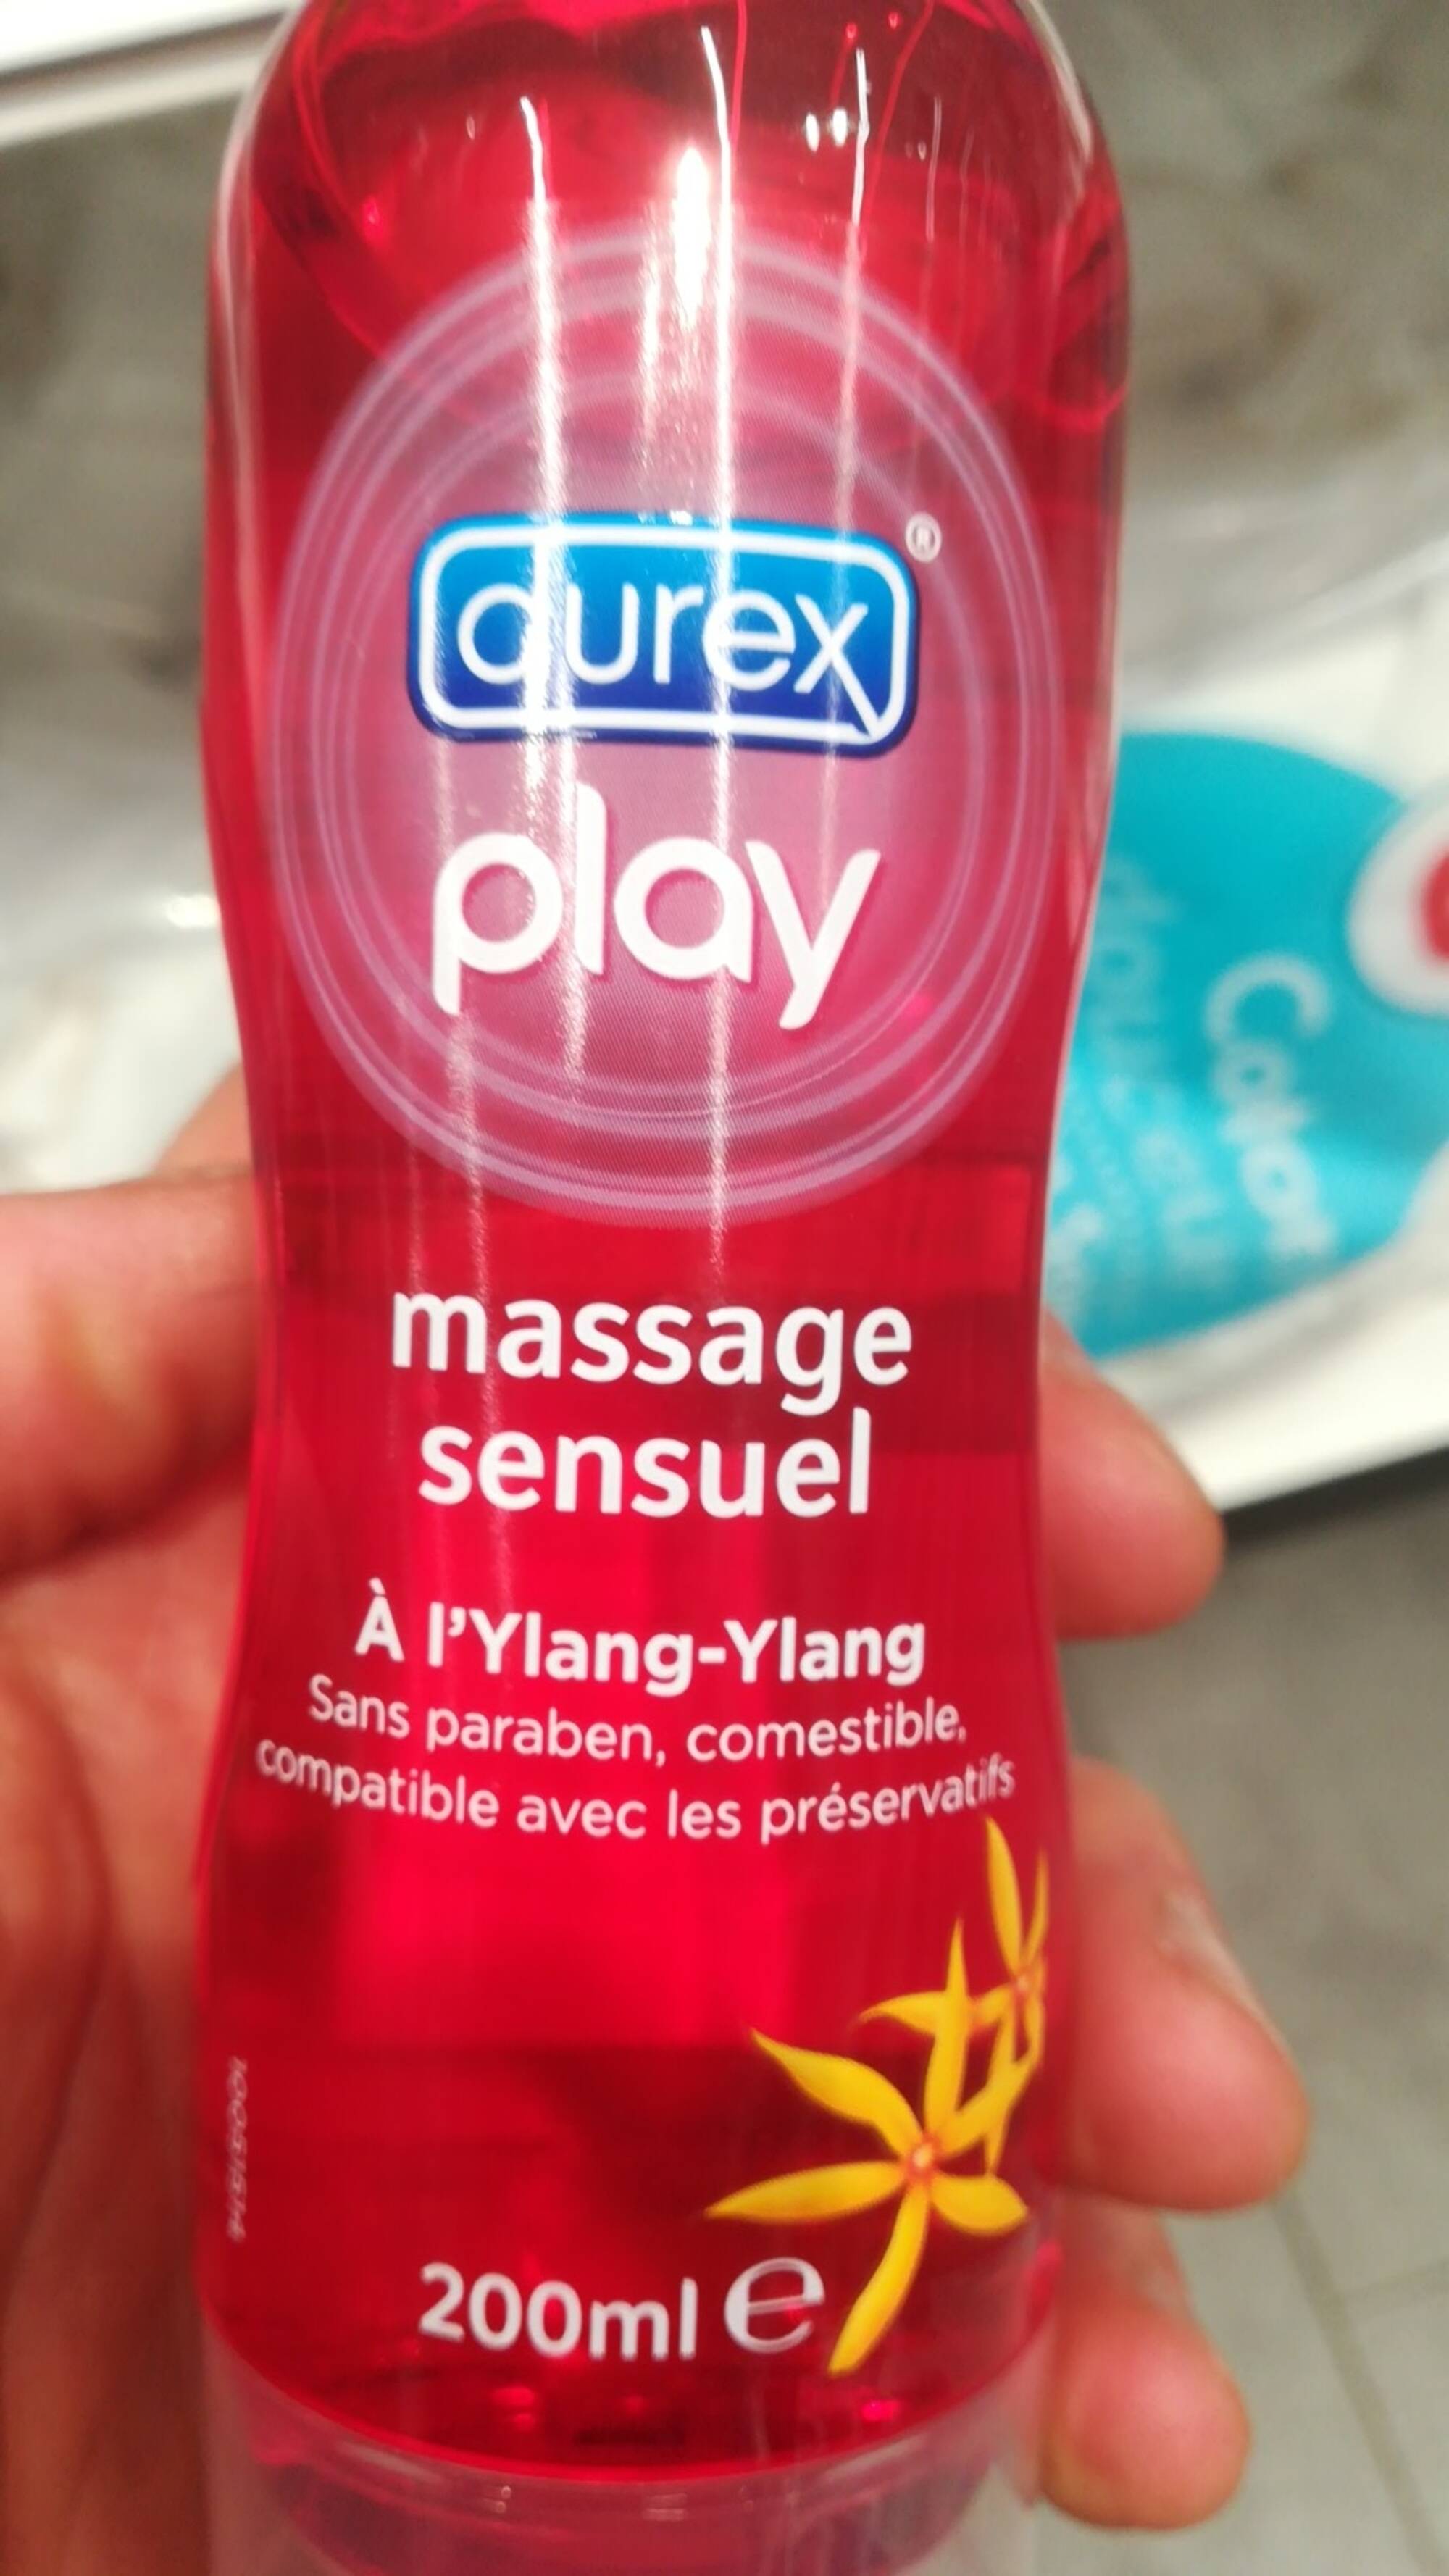 DUREX - Play - Massage sensuel à l'ylang-ylang